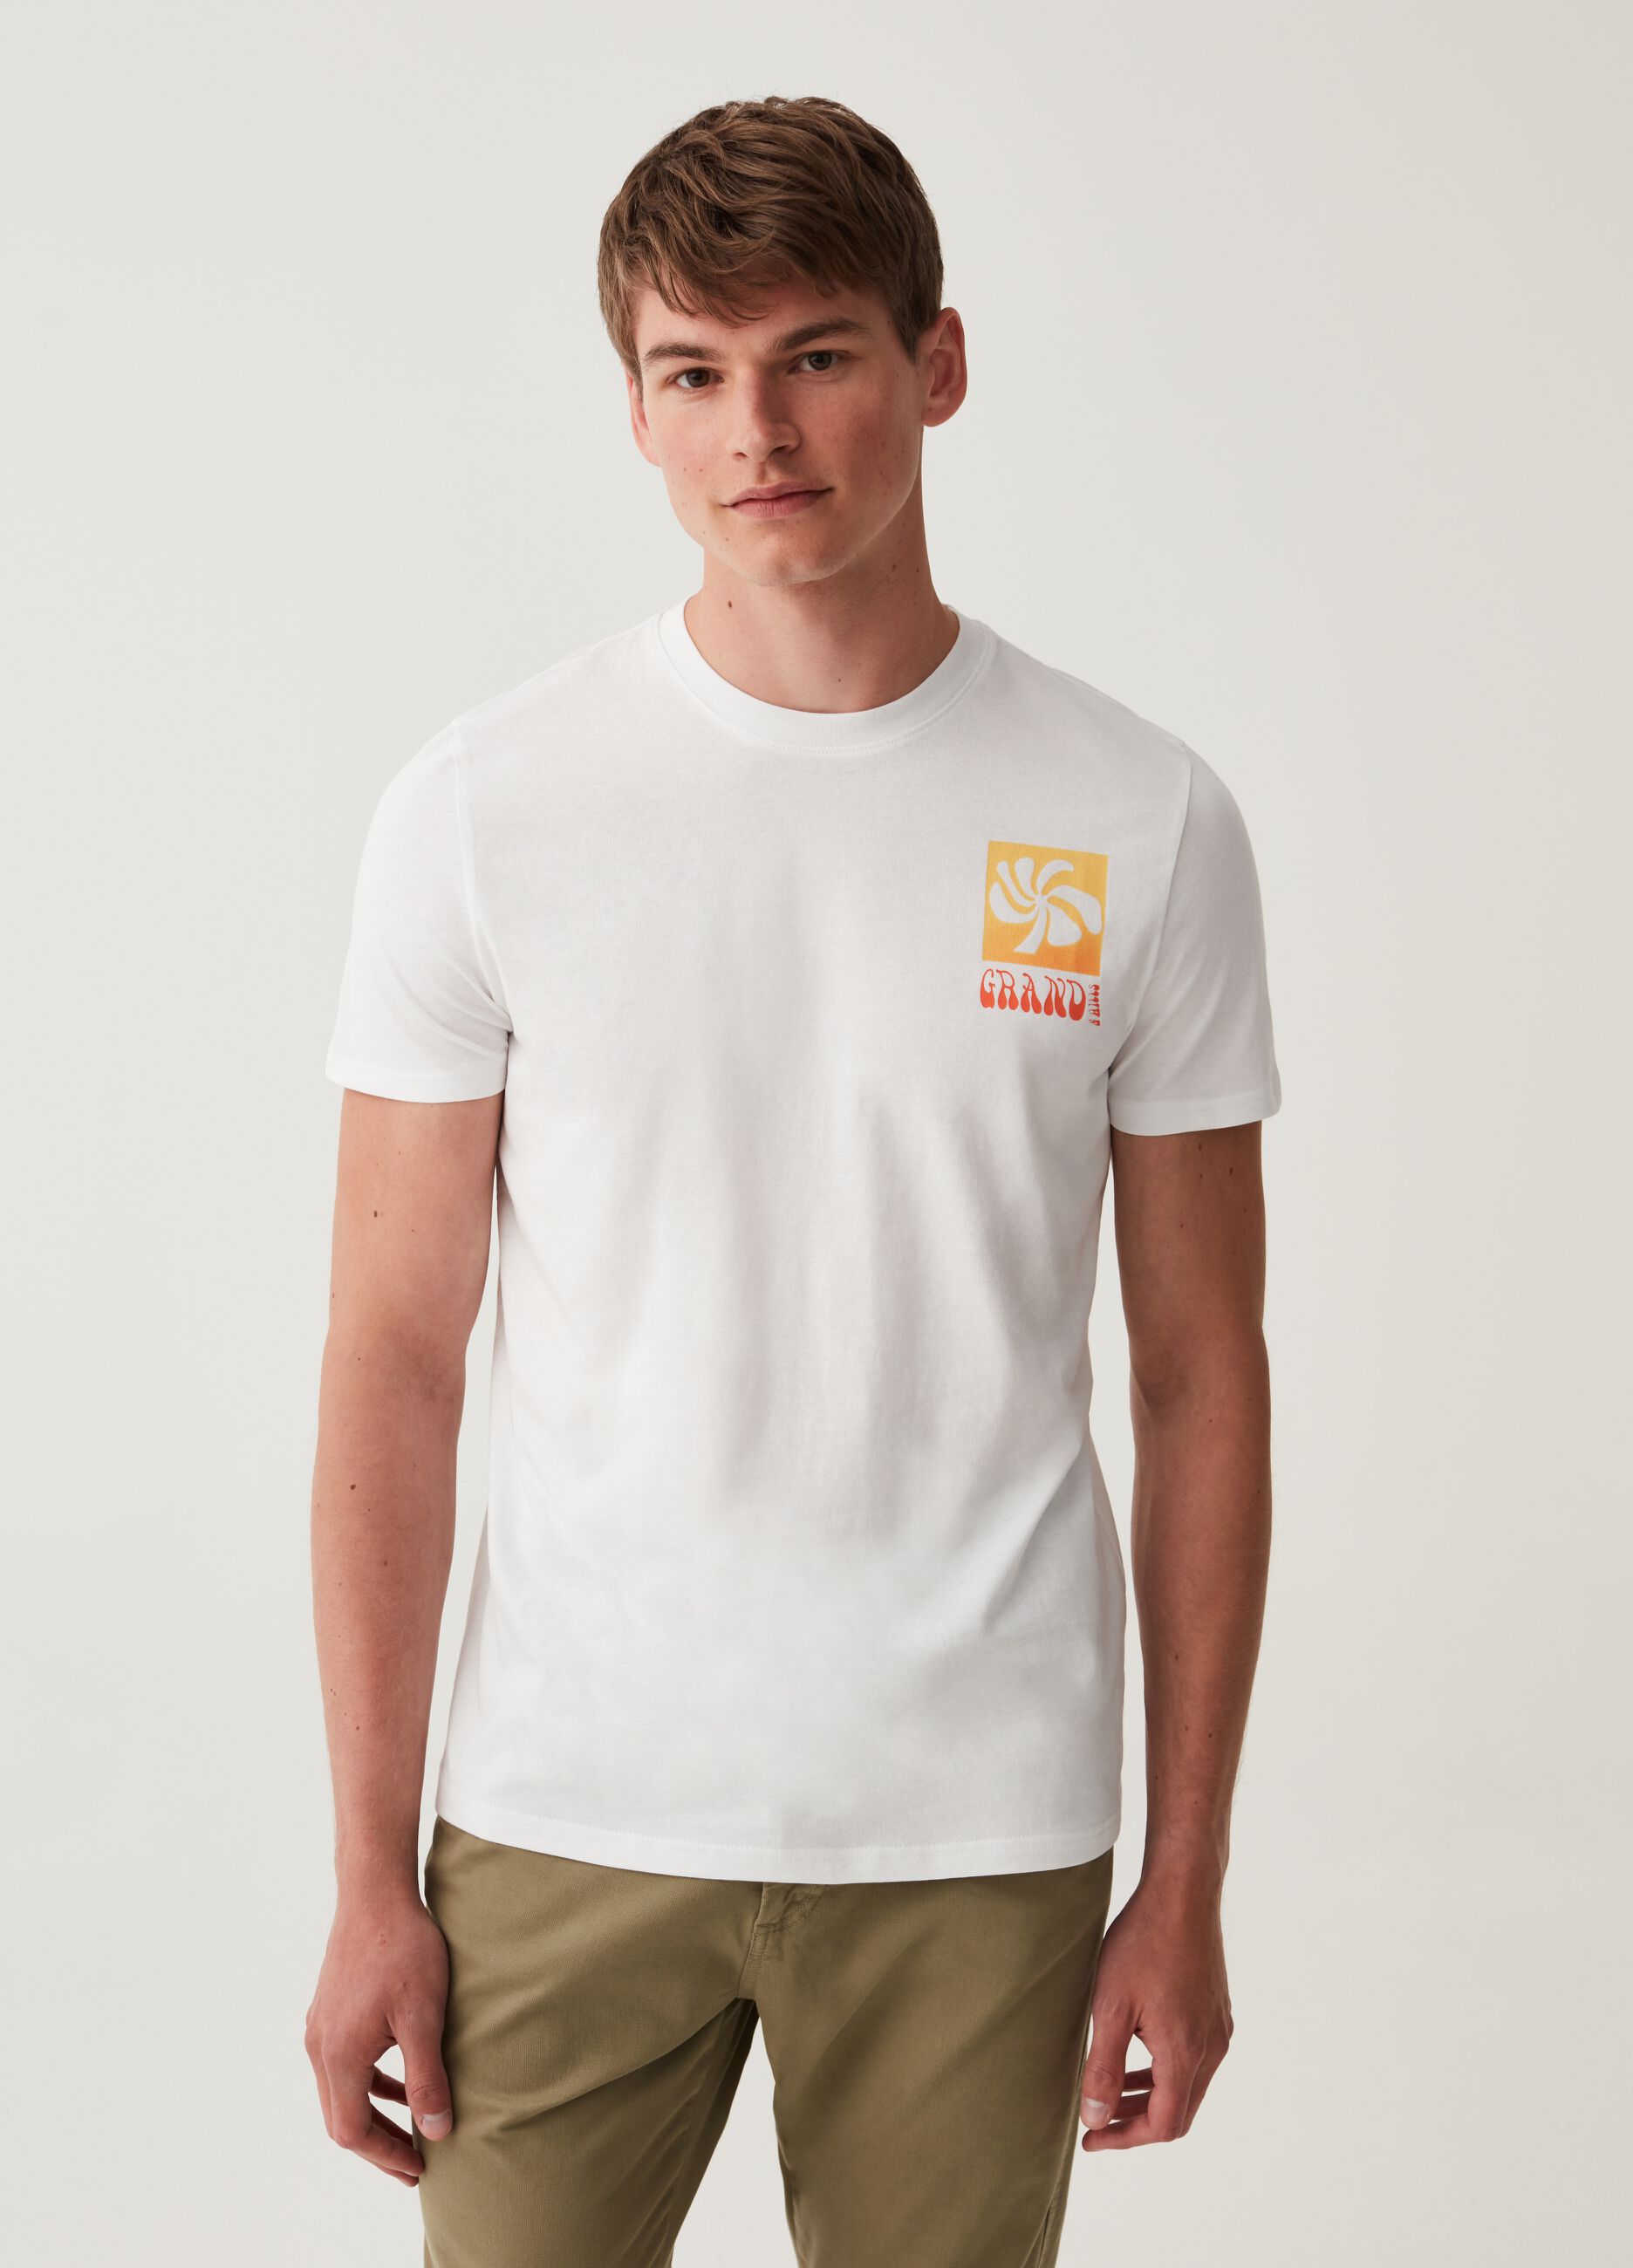 Grand&Hills print T-shirt